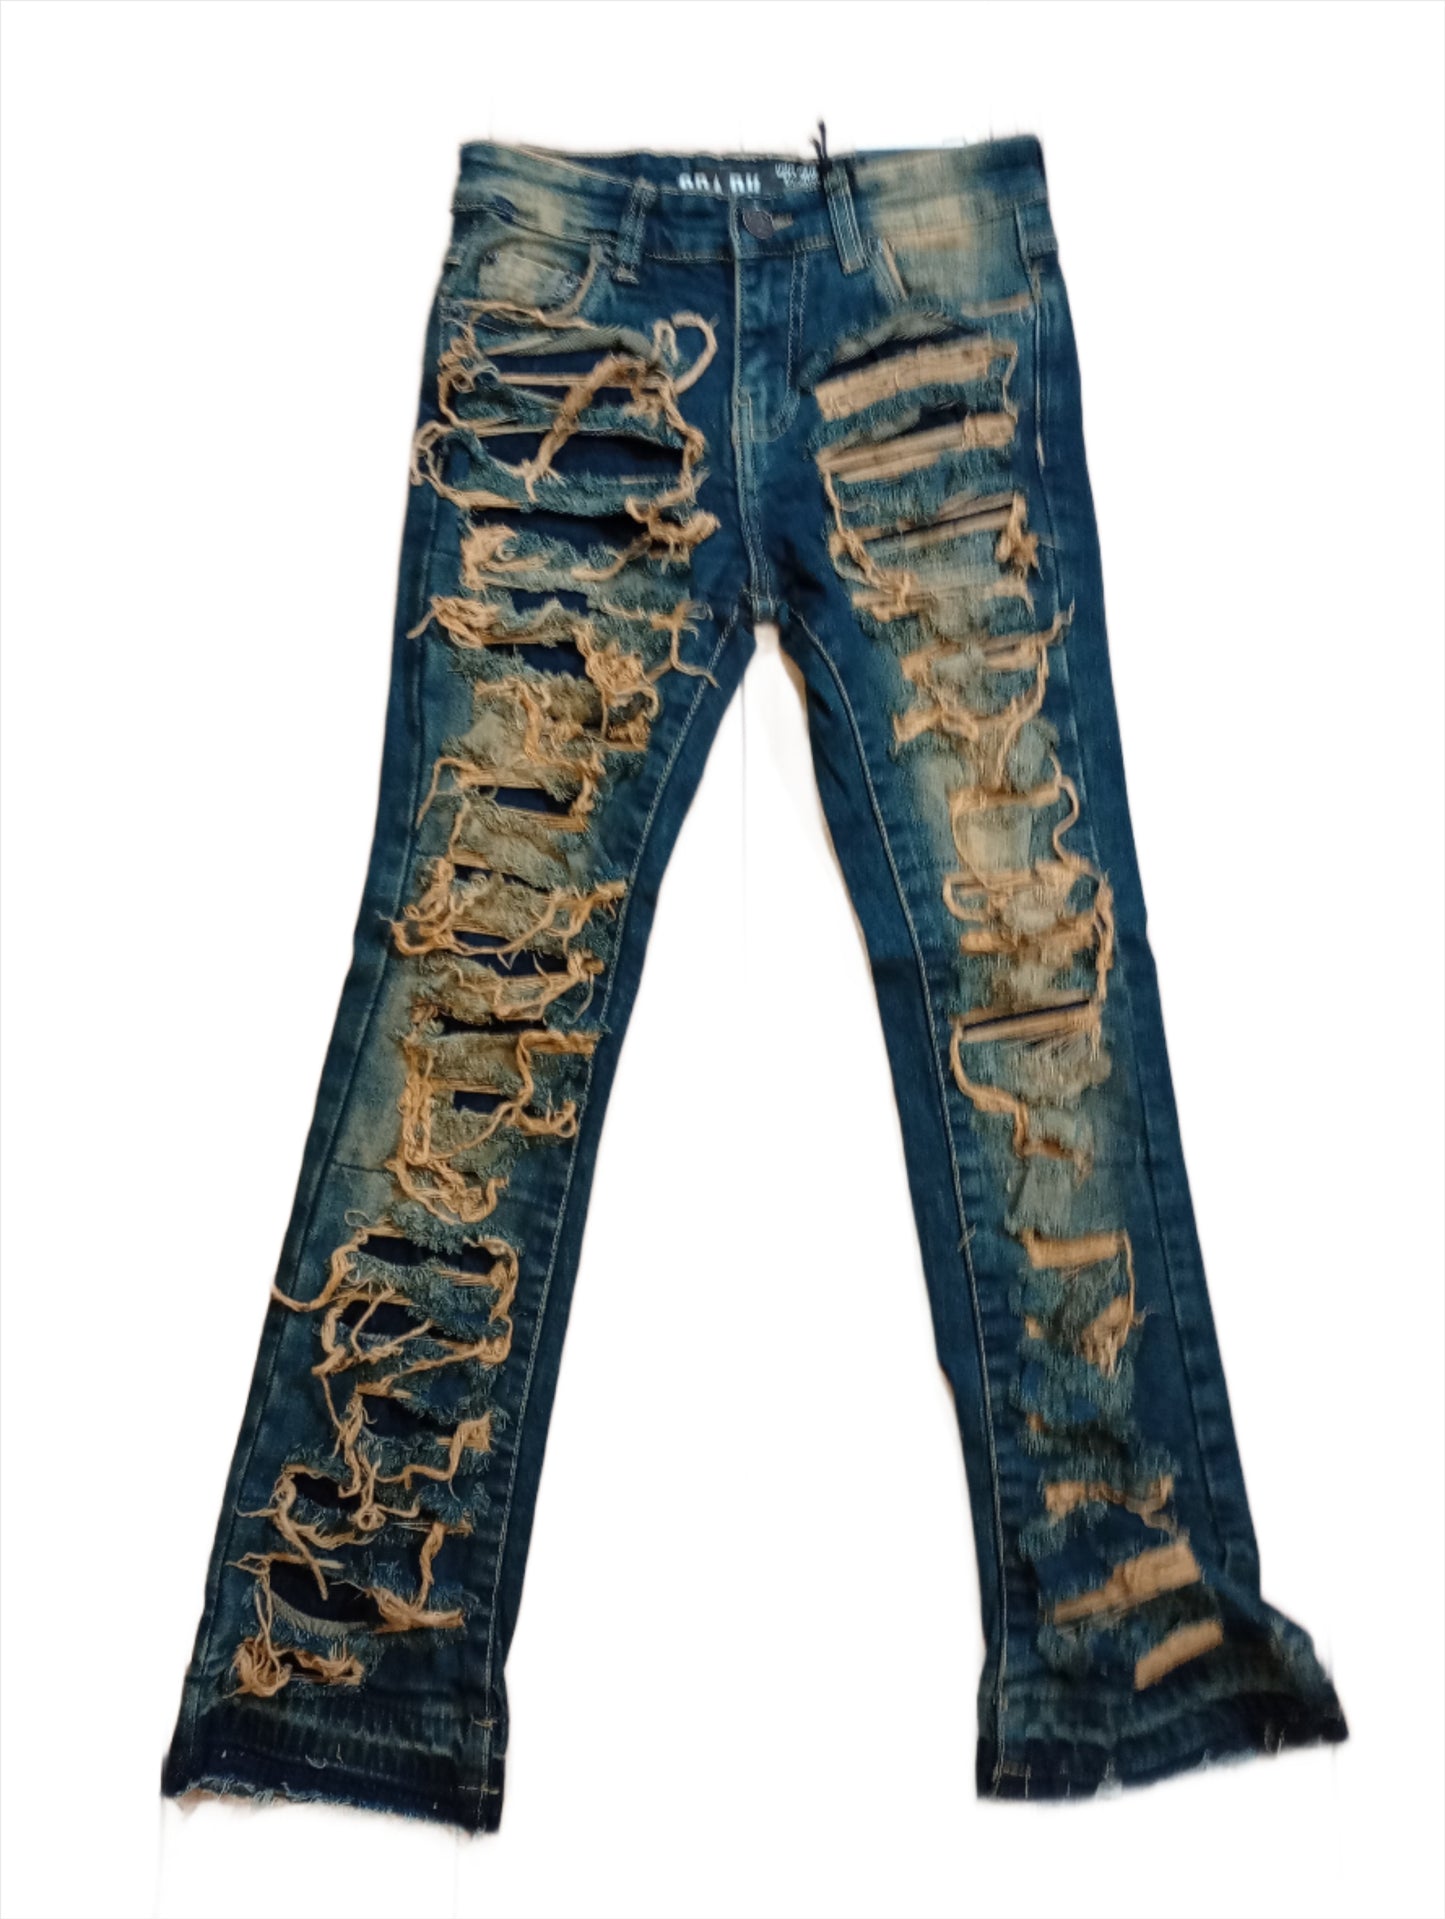 Rip/Repair Stacked Jeans